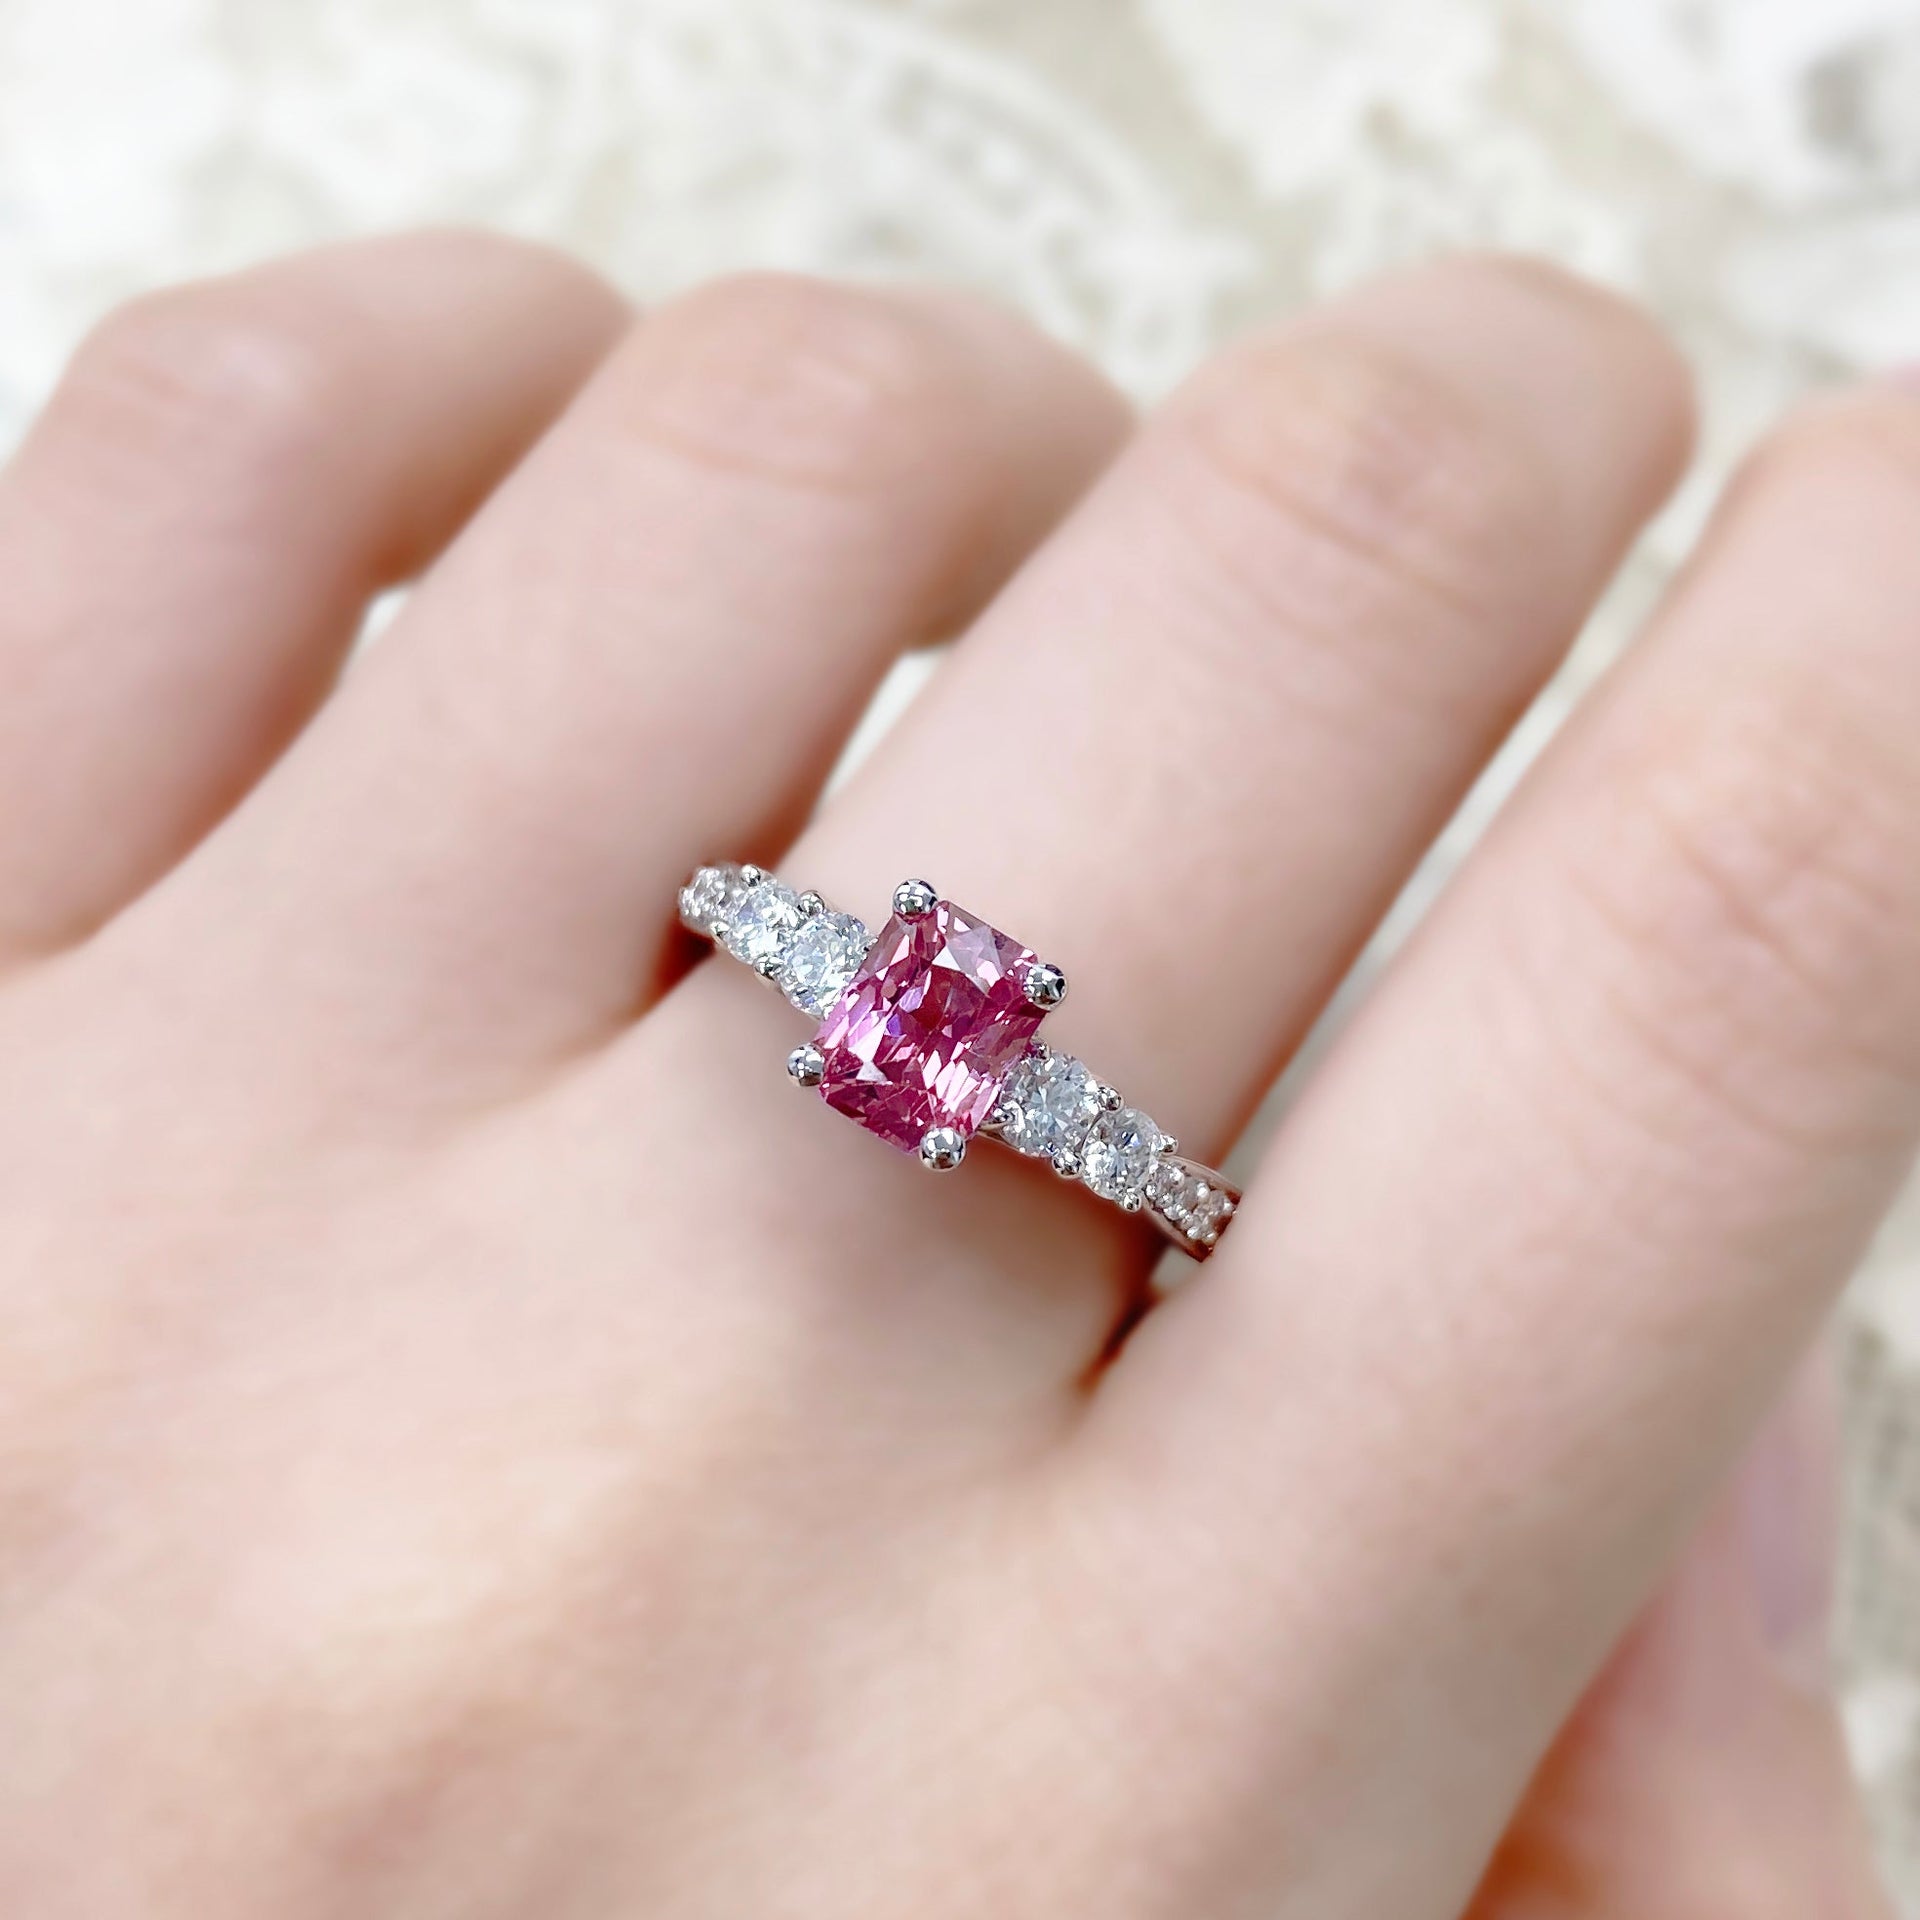 18K白金天然1.22ct雷地恩形粉紅色藍寶石鑽石戒指 (附証書) - WILLS JEWELLERY